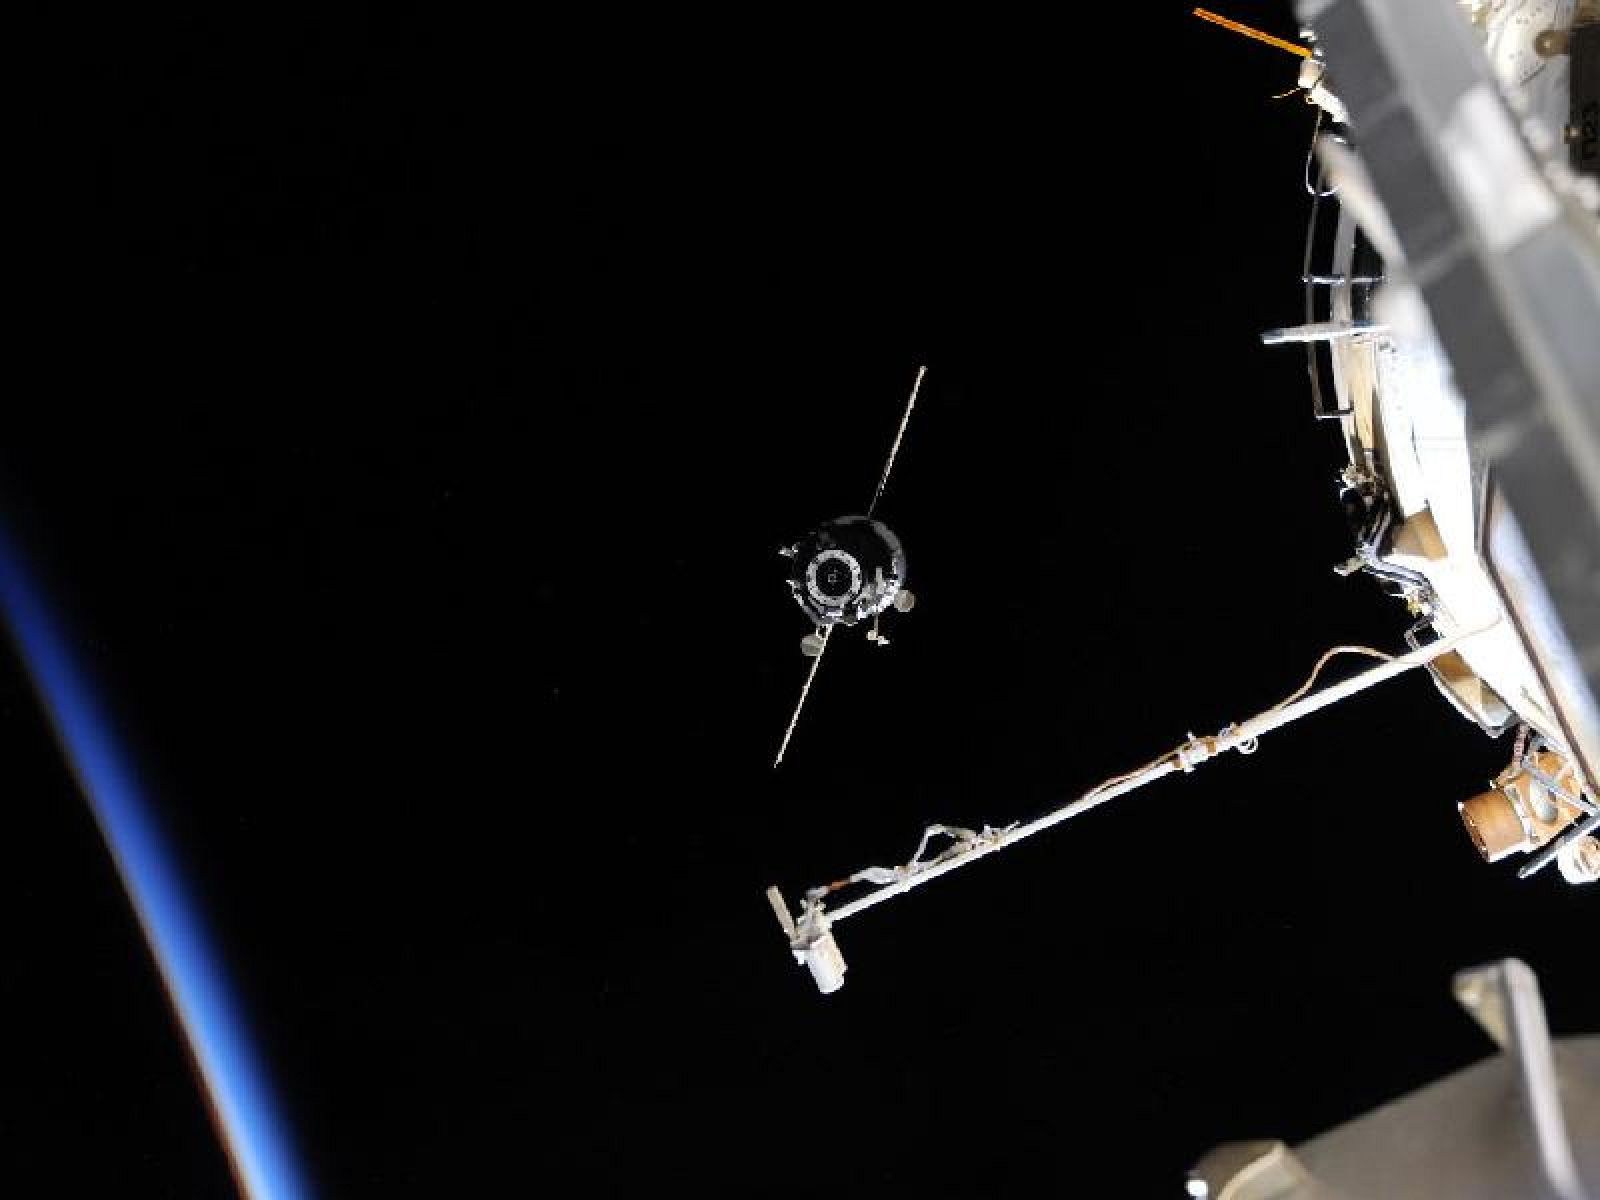 La nave rusa Progress M-07M se acopla a la ISS